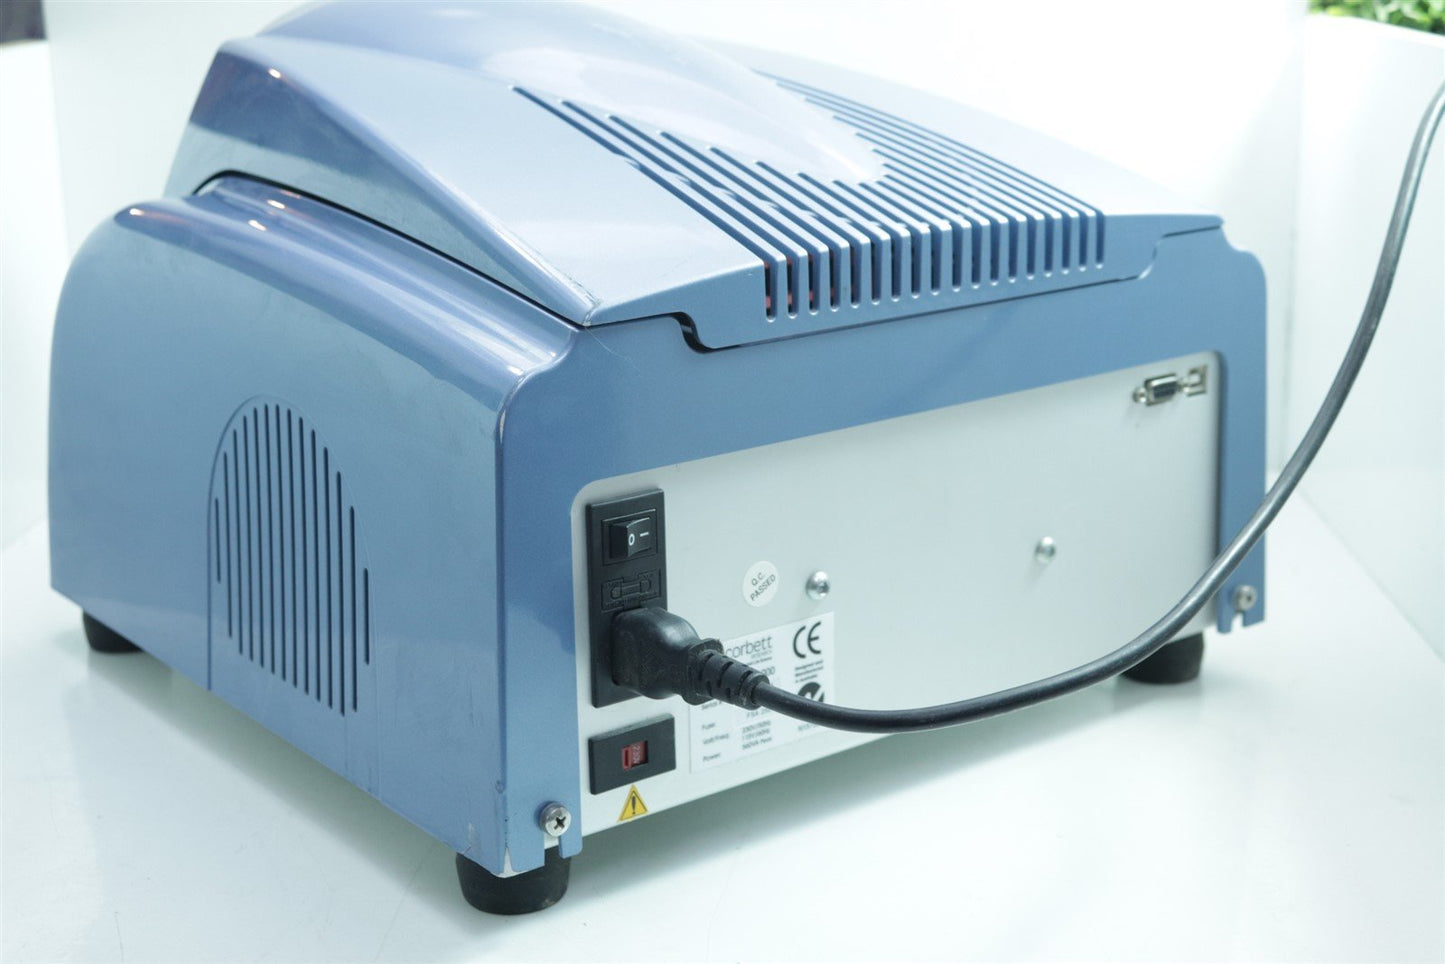 Corbett (Qiagen) Rotor-Gene 2PLEX RG-6000 Real Time PCR Analayser Fully Tested